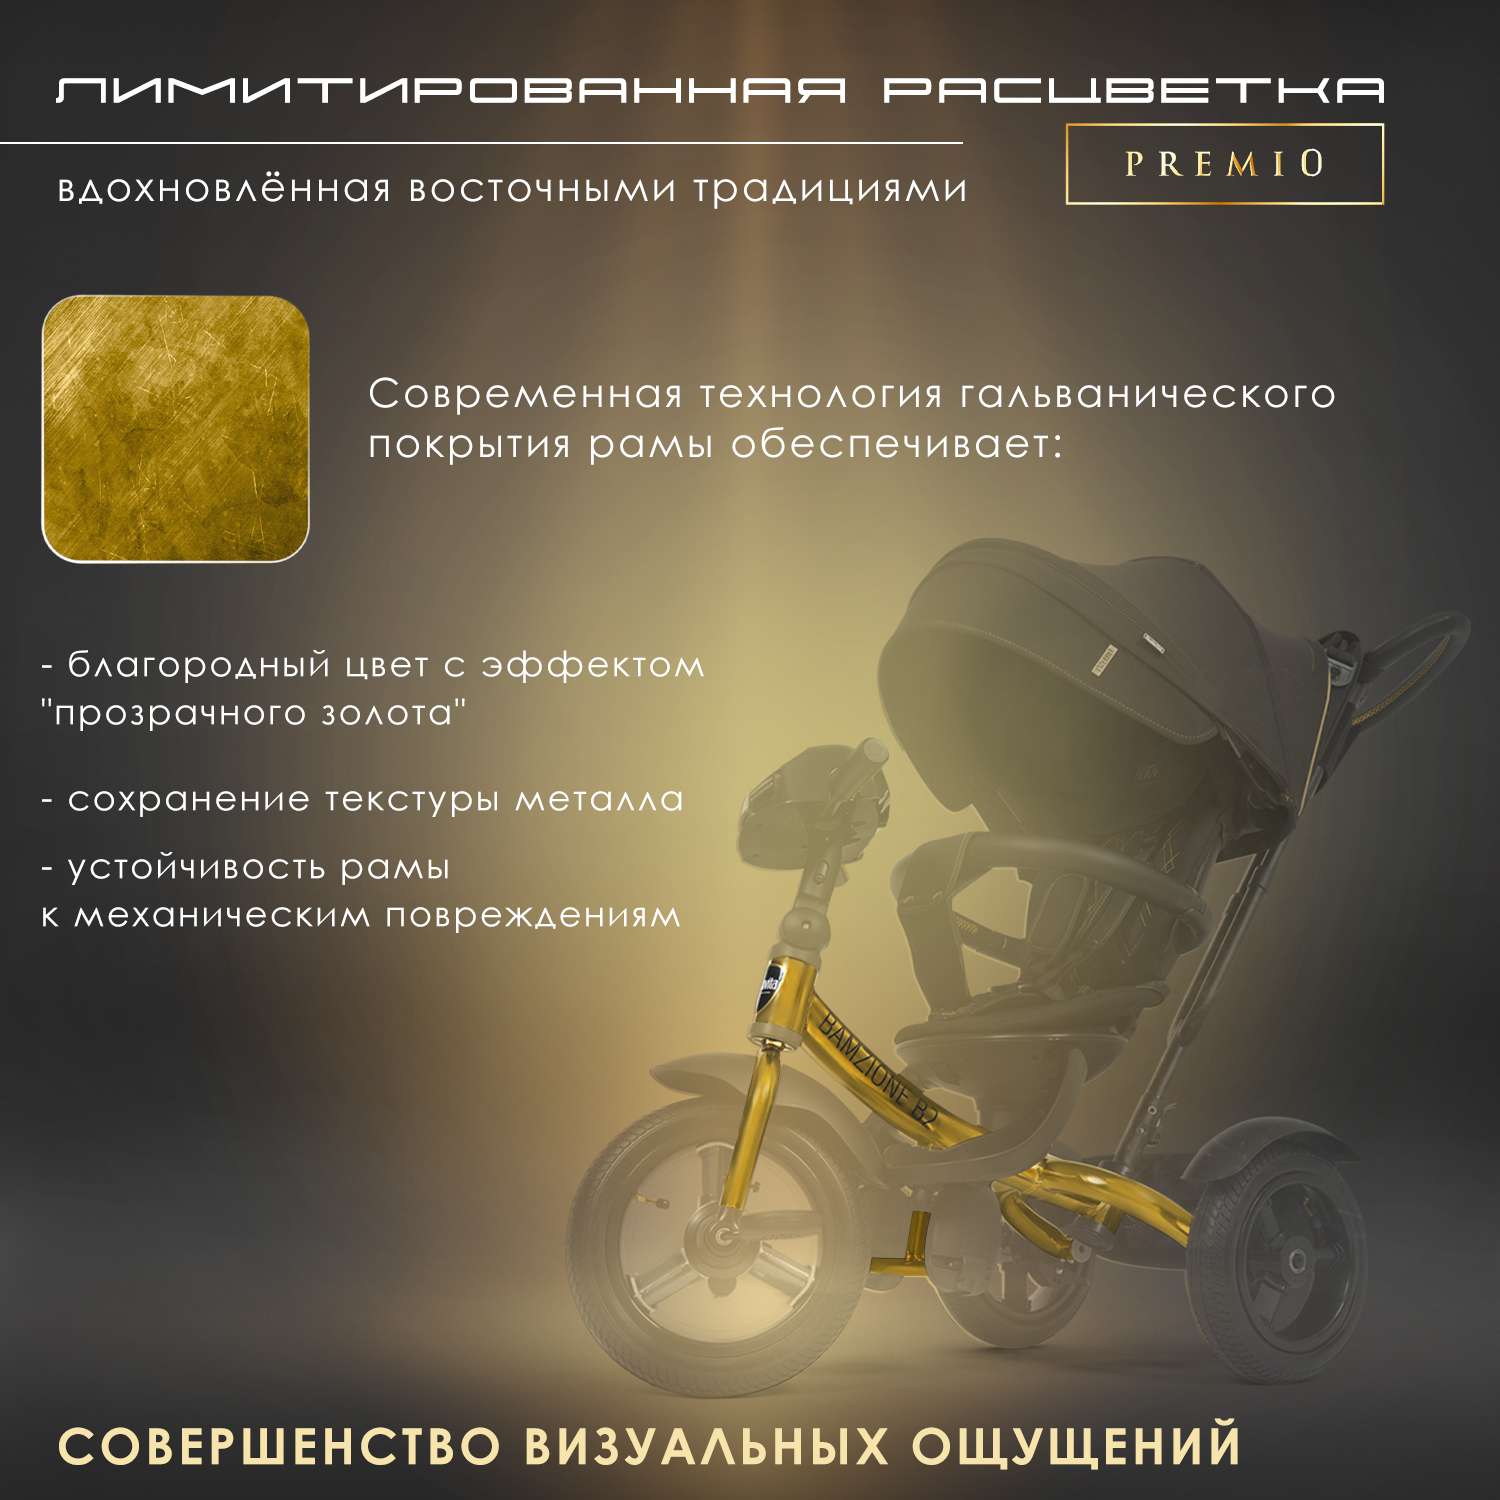 Трехколесный велосипед Nuovita Bamzione B2 Premio черное золото - фото 13